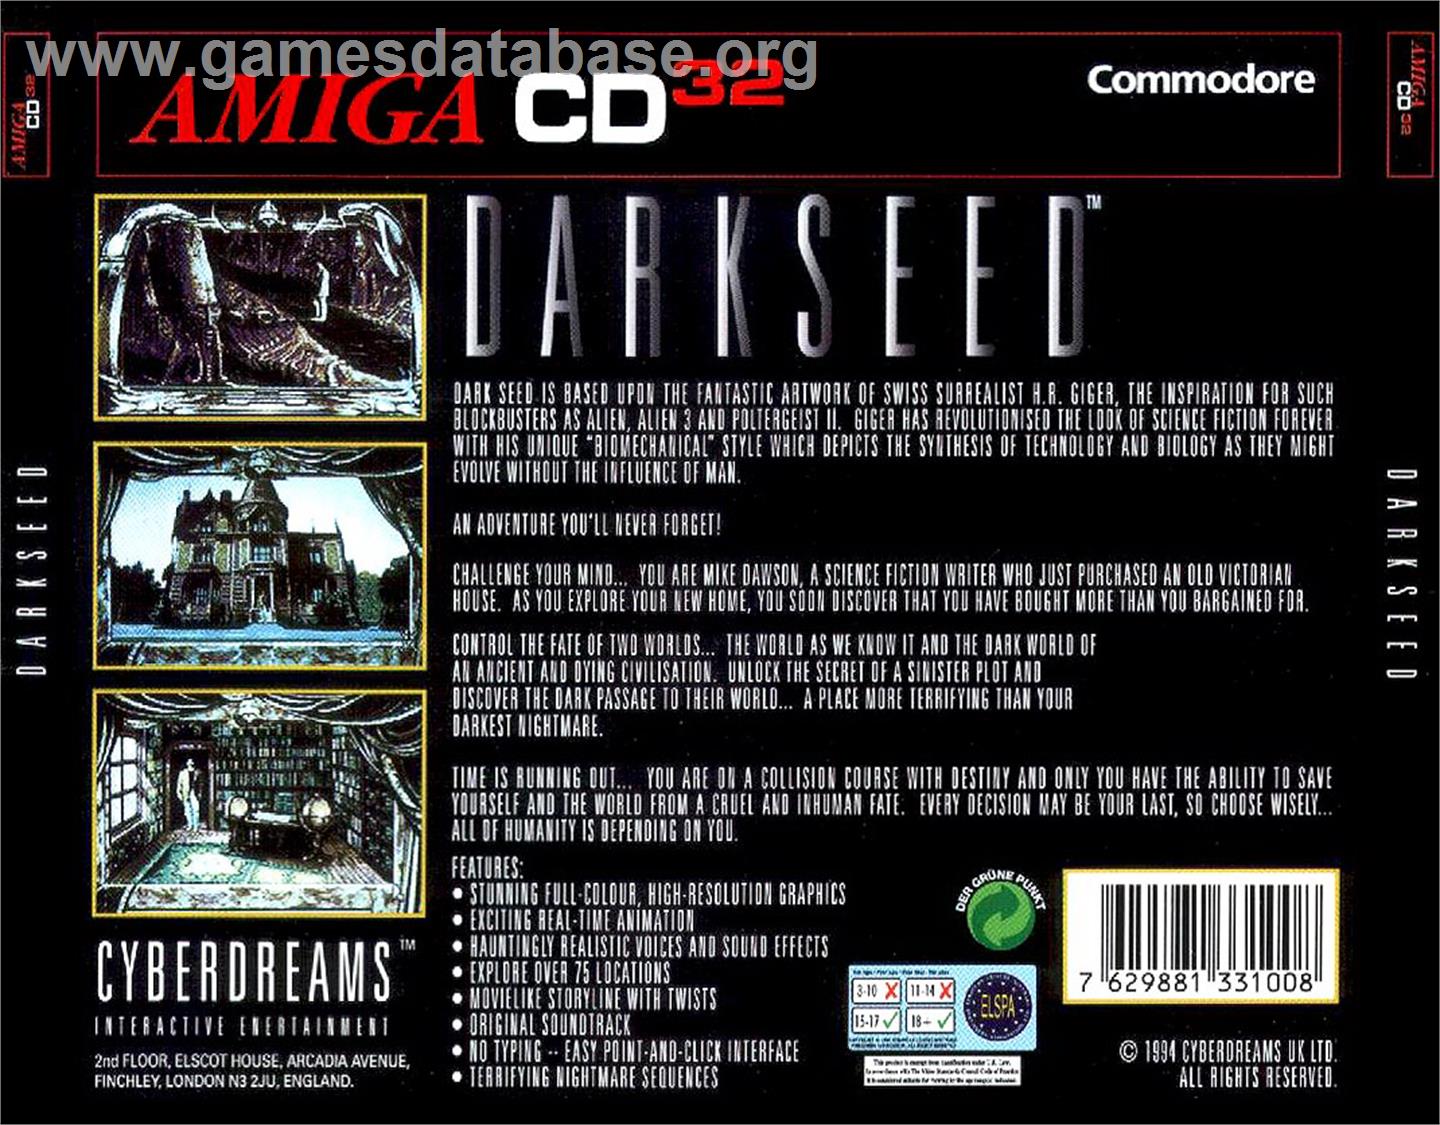 Dark Seed - Commodore Amiga CD32 - Artwork - Box Back